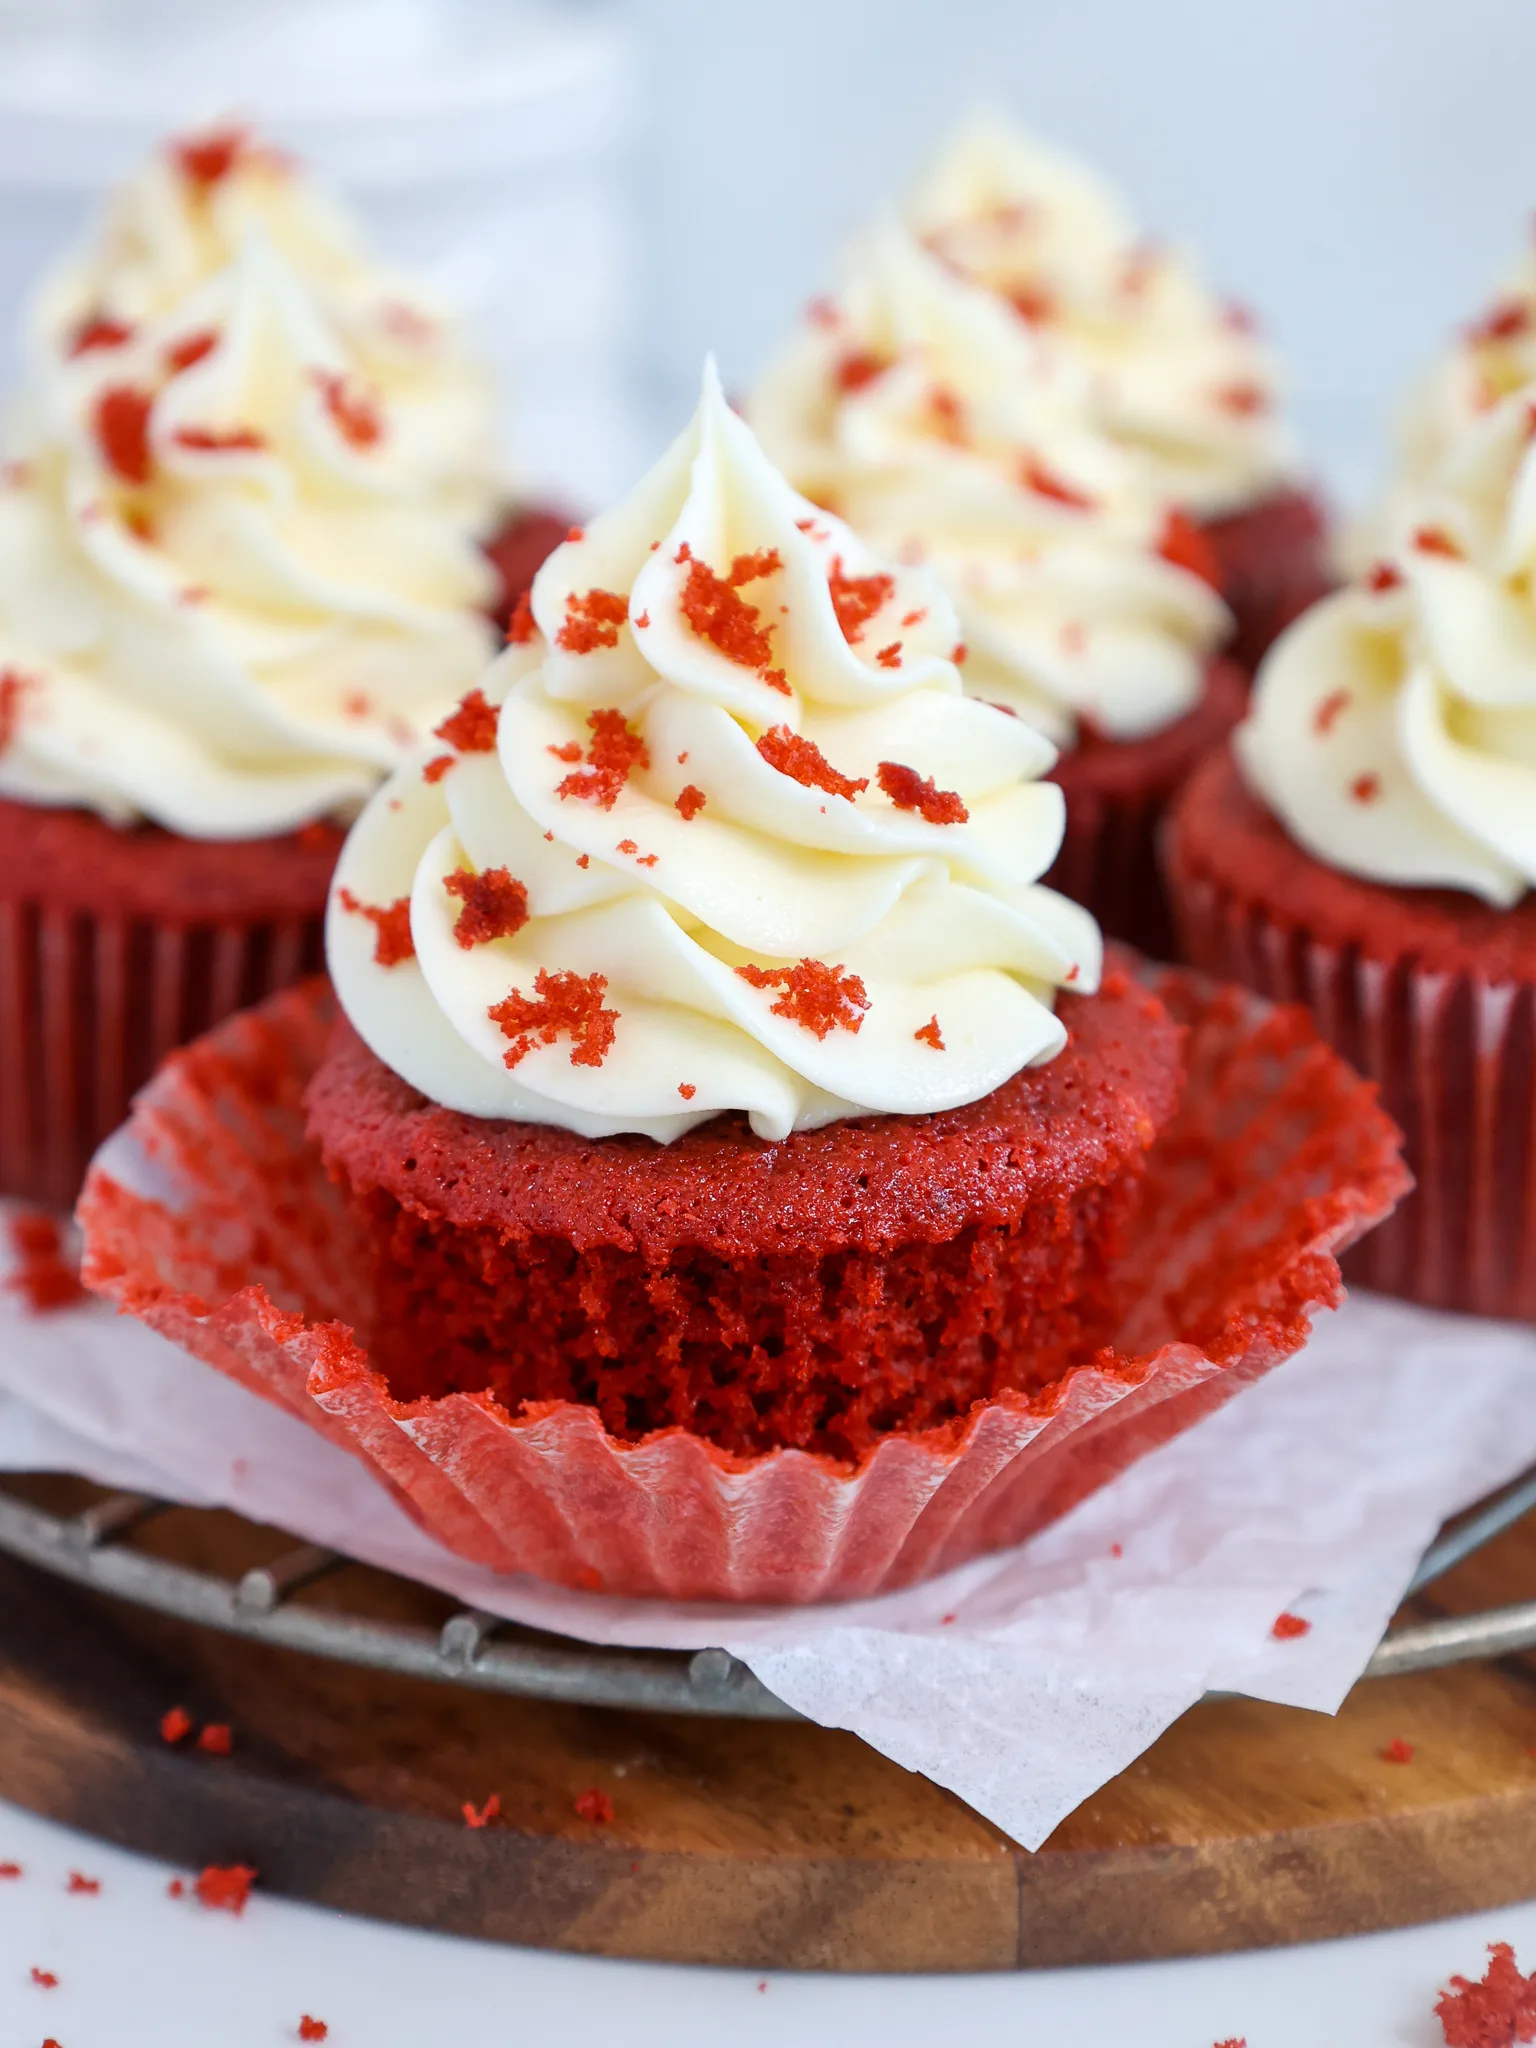 https://chelsweets.com/wp-content/uploads/2022/07/unwrapped-finished-red-velvet-cupcakesv1.jpg.webp